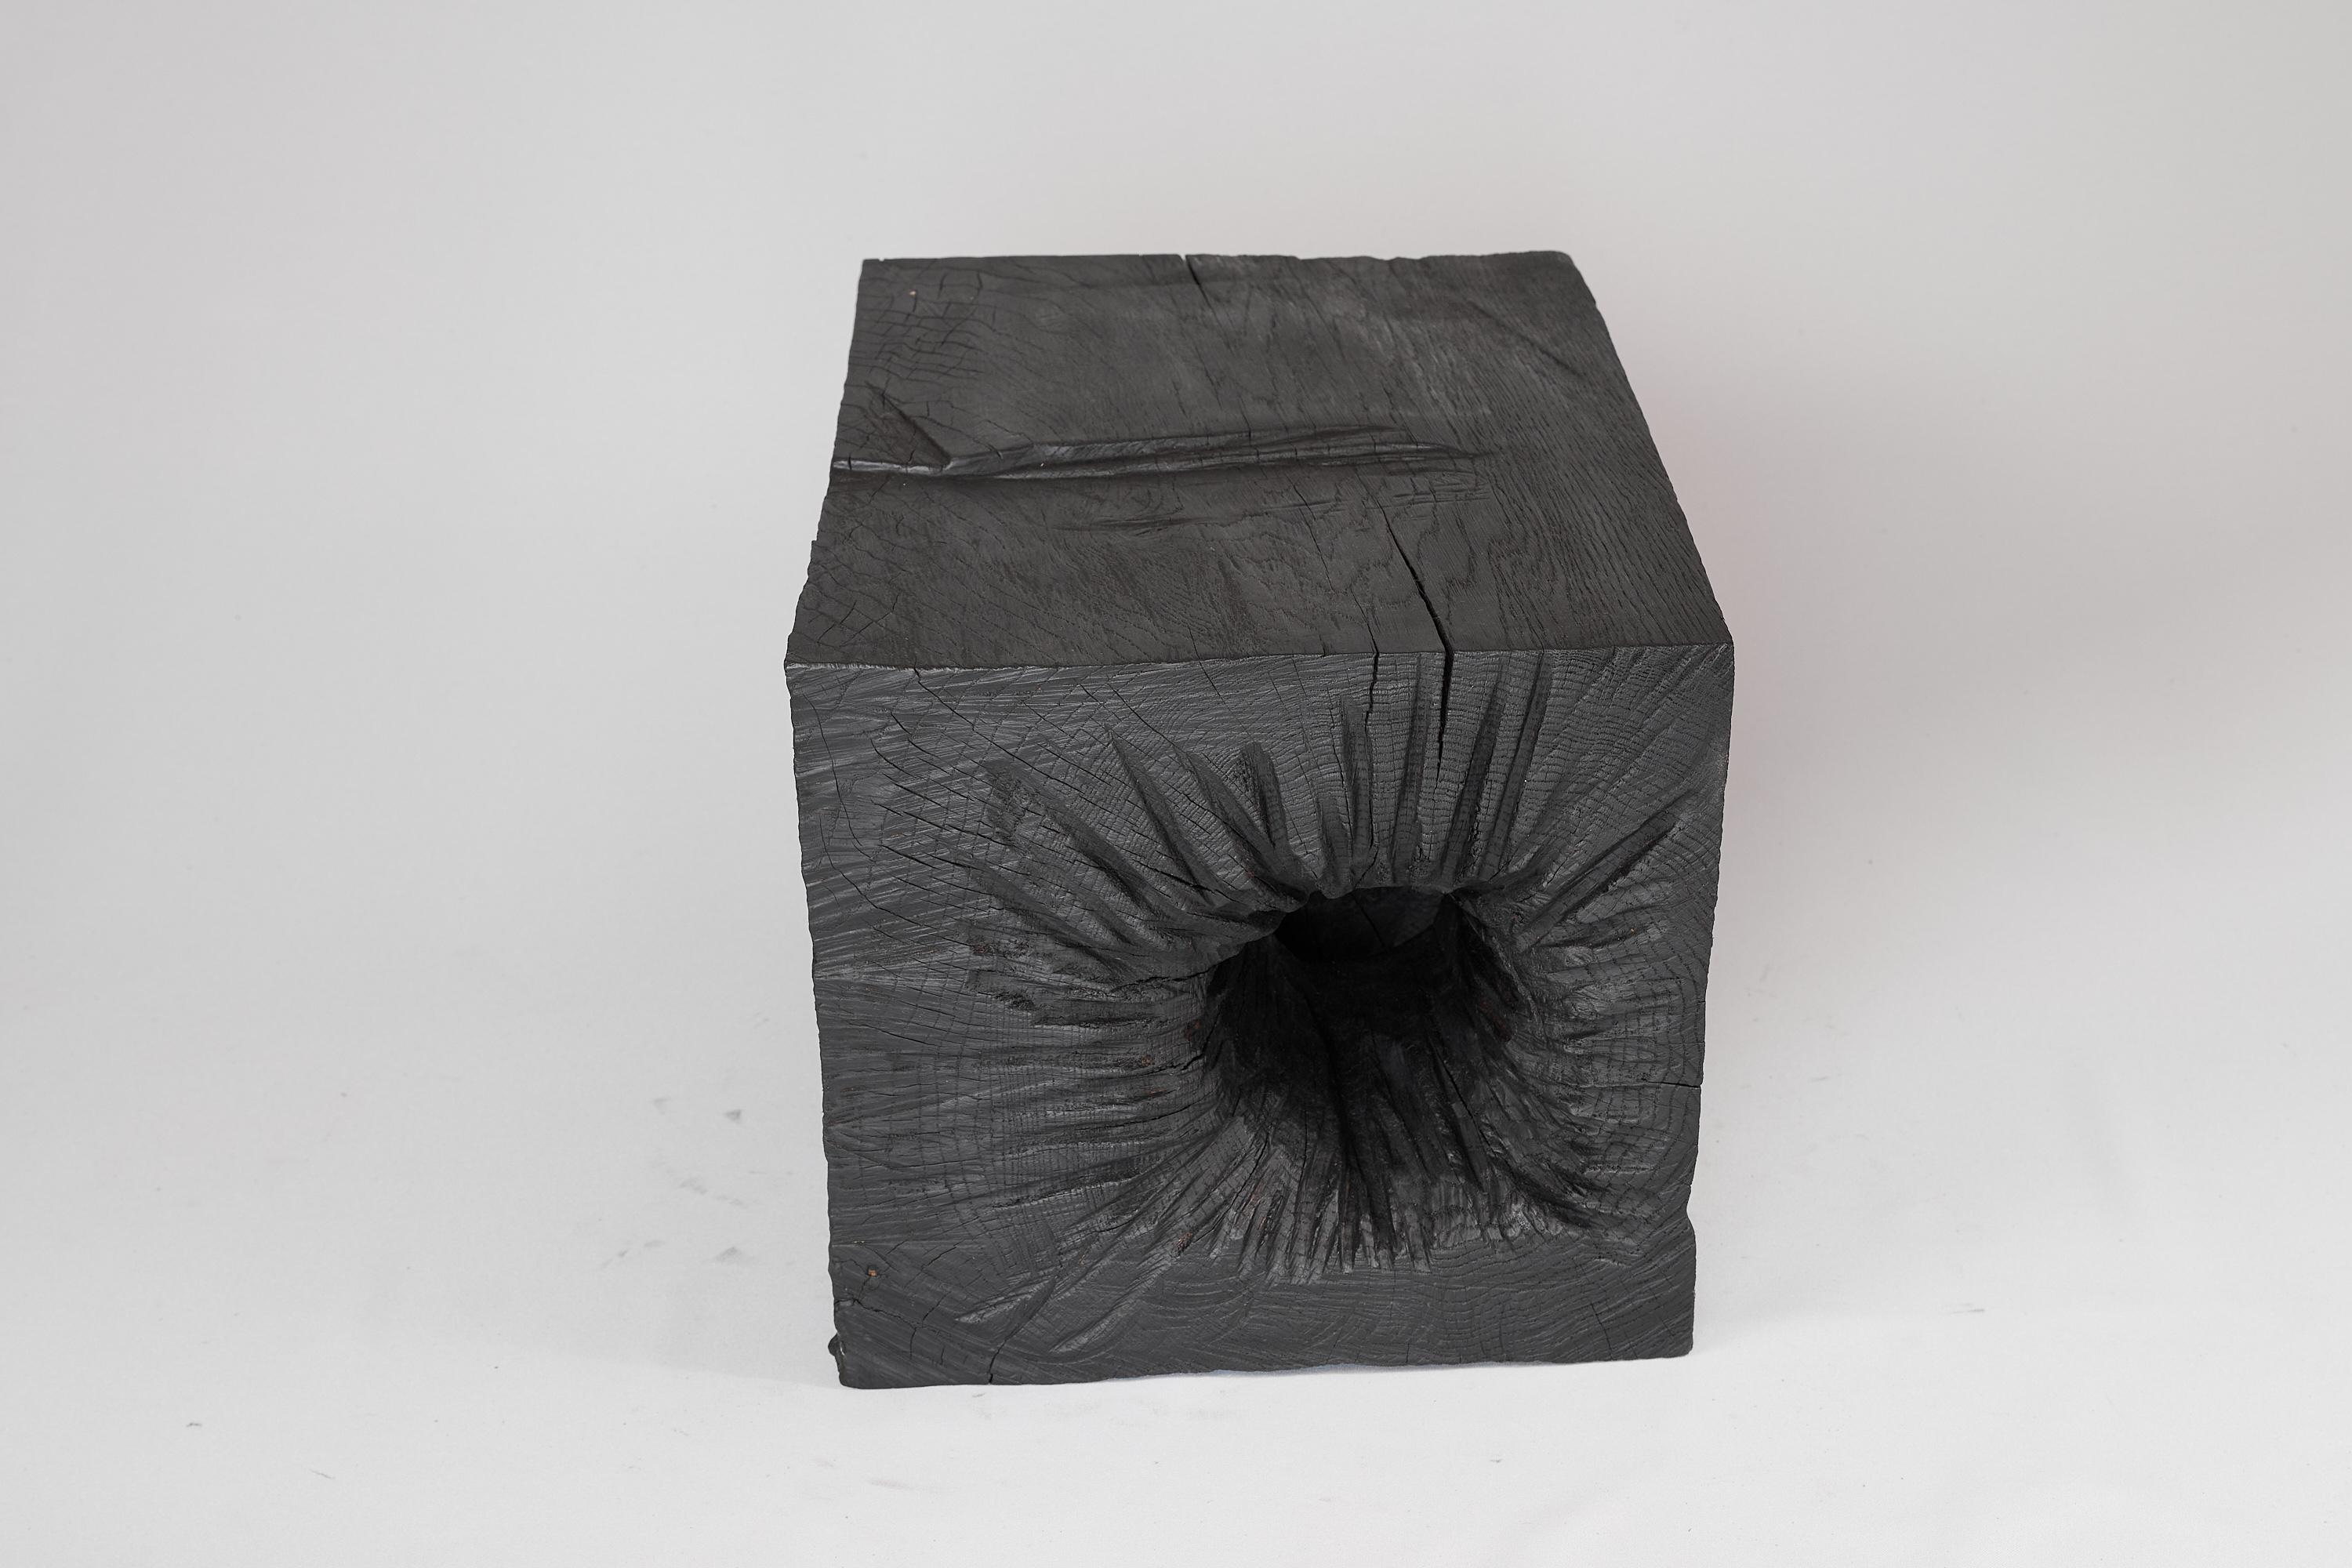 Solid Burnt Wood, Sculptural Side Table, Original Contemporary Design, Logniture For Sale 4